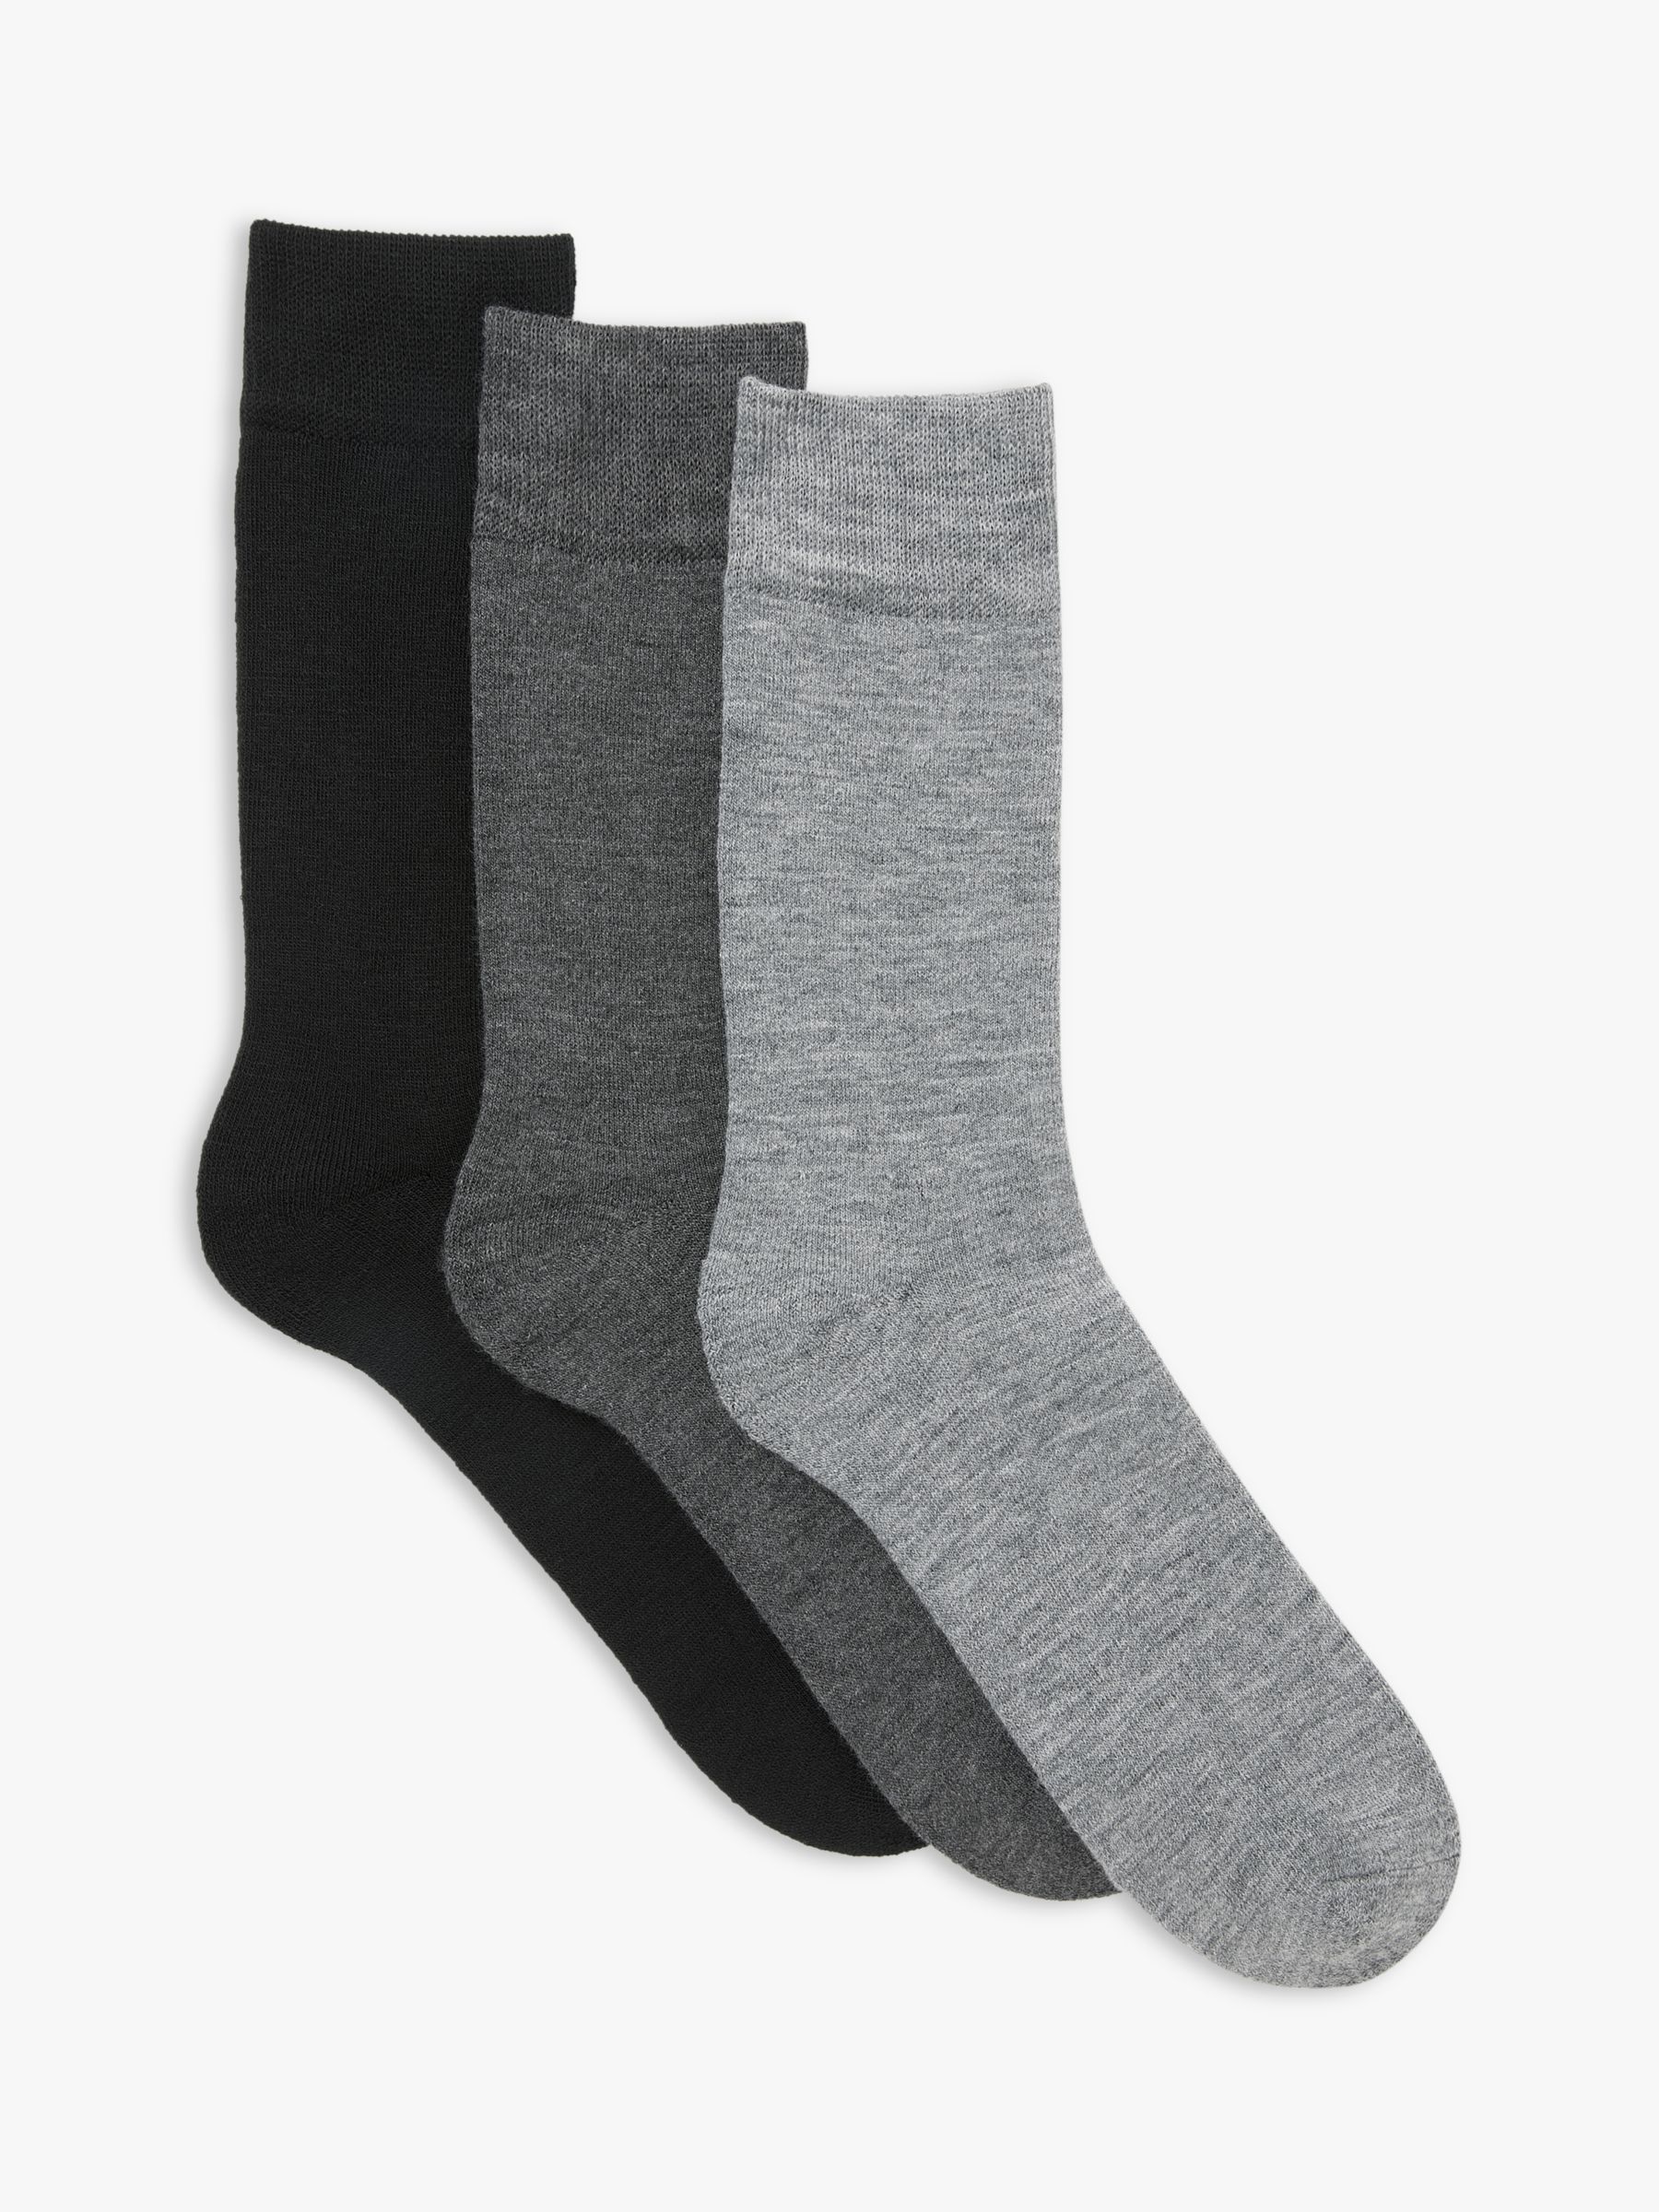 Men's Crew Sport socks. Gym socks, Retro Styling, Cotton-rich, Ribbed leg,  Cushioned foot.